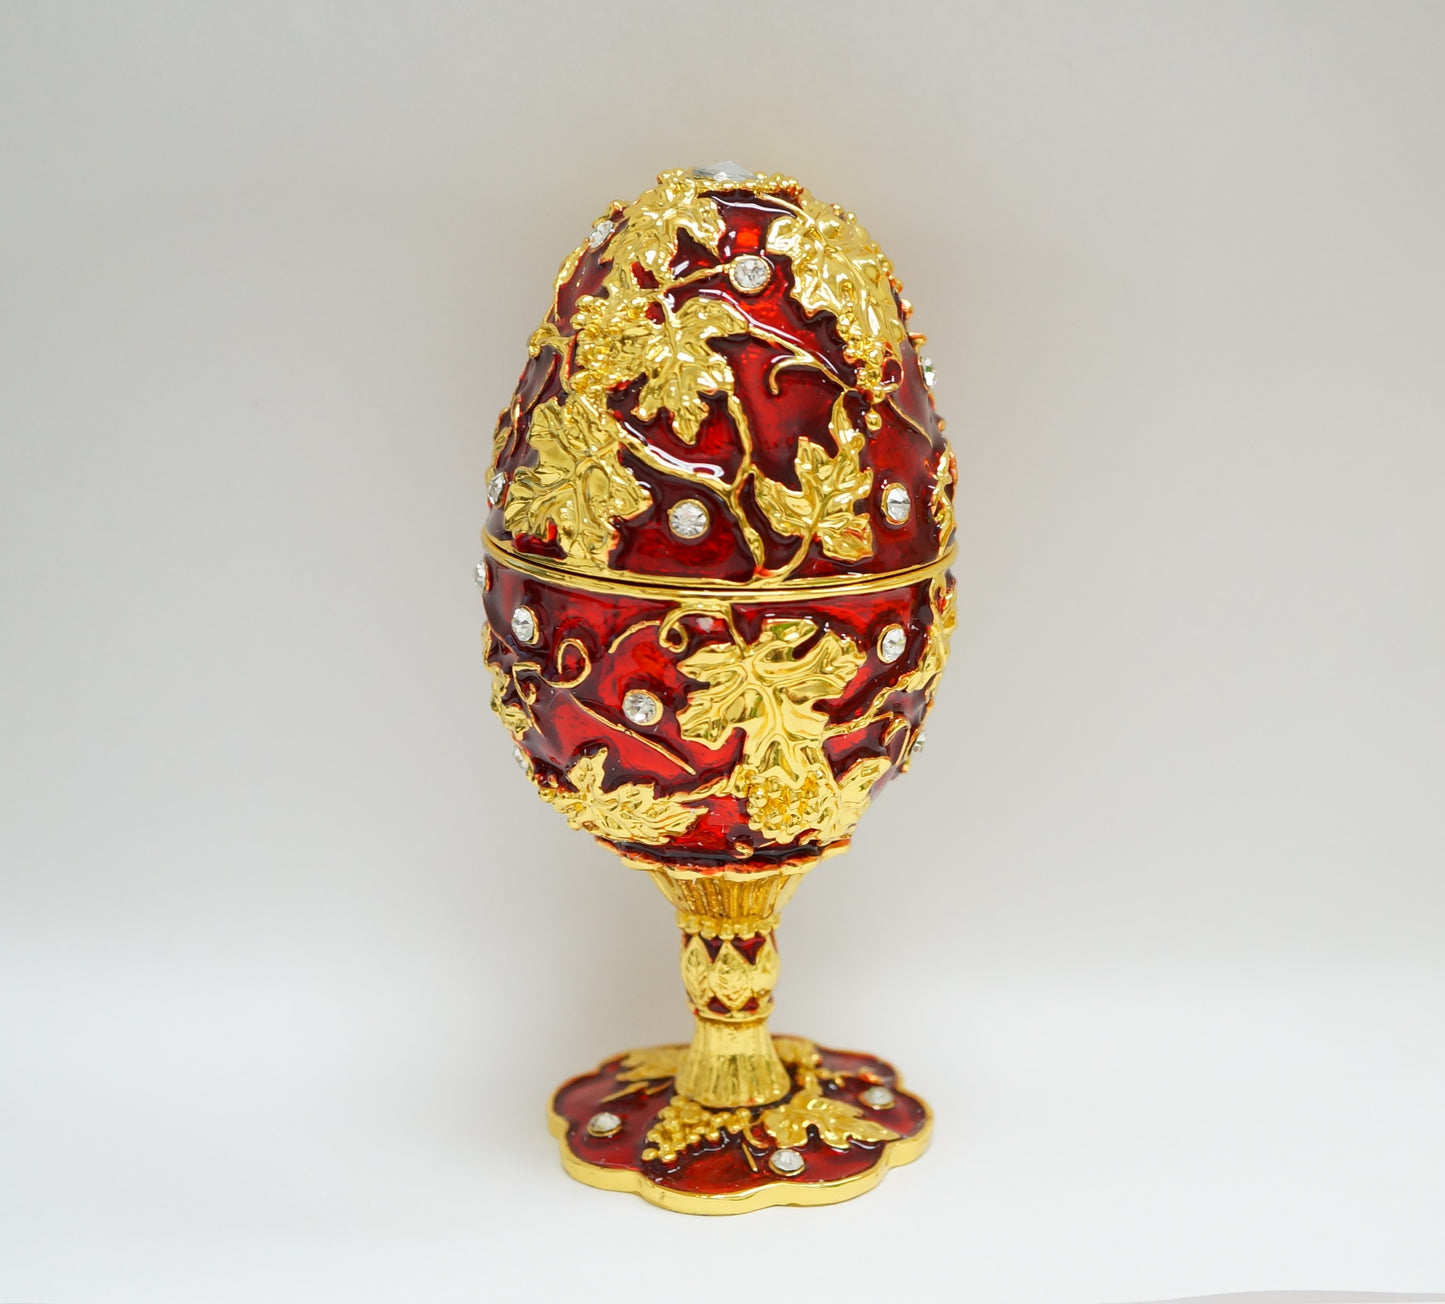 Cristiani Collezione Red Gold leaves Musical Egg Trinket Box.